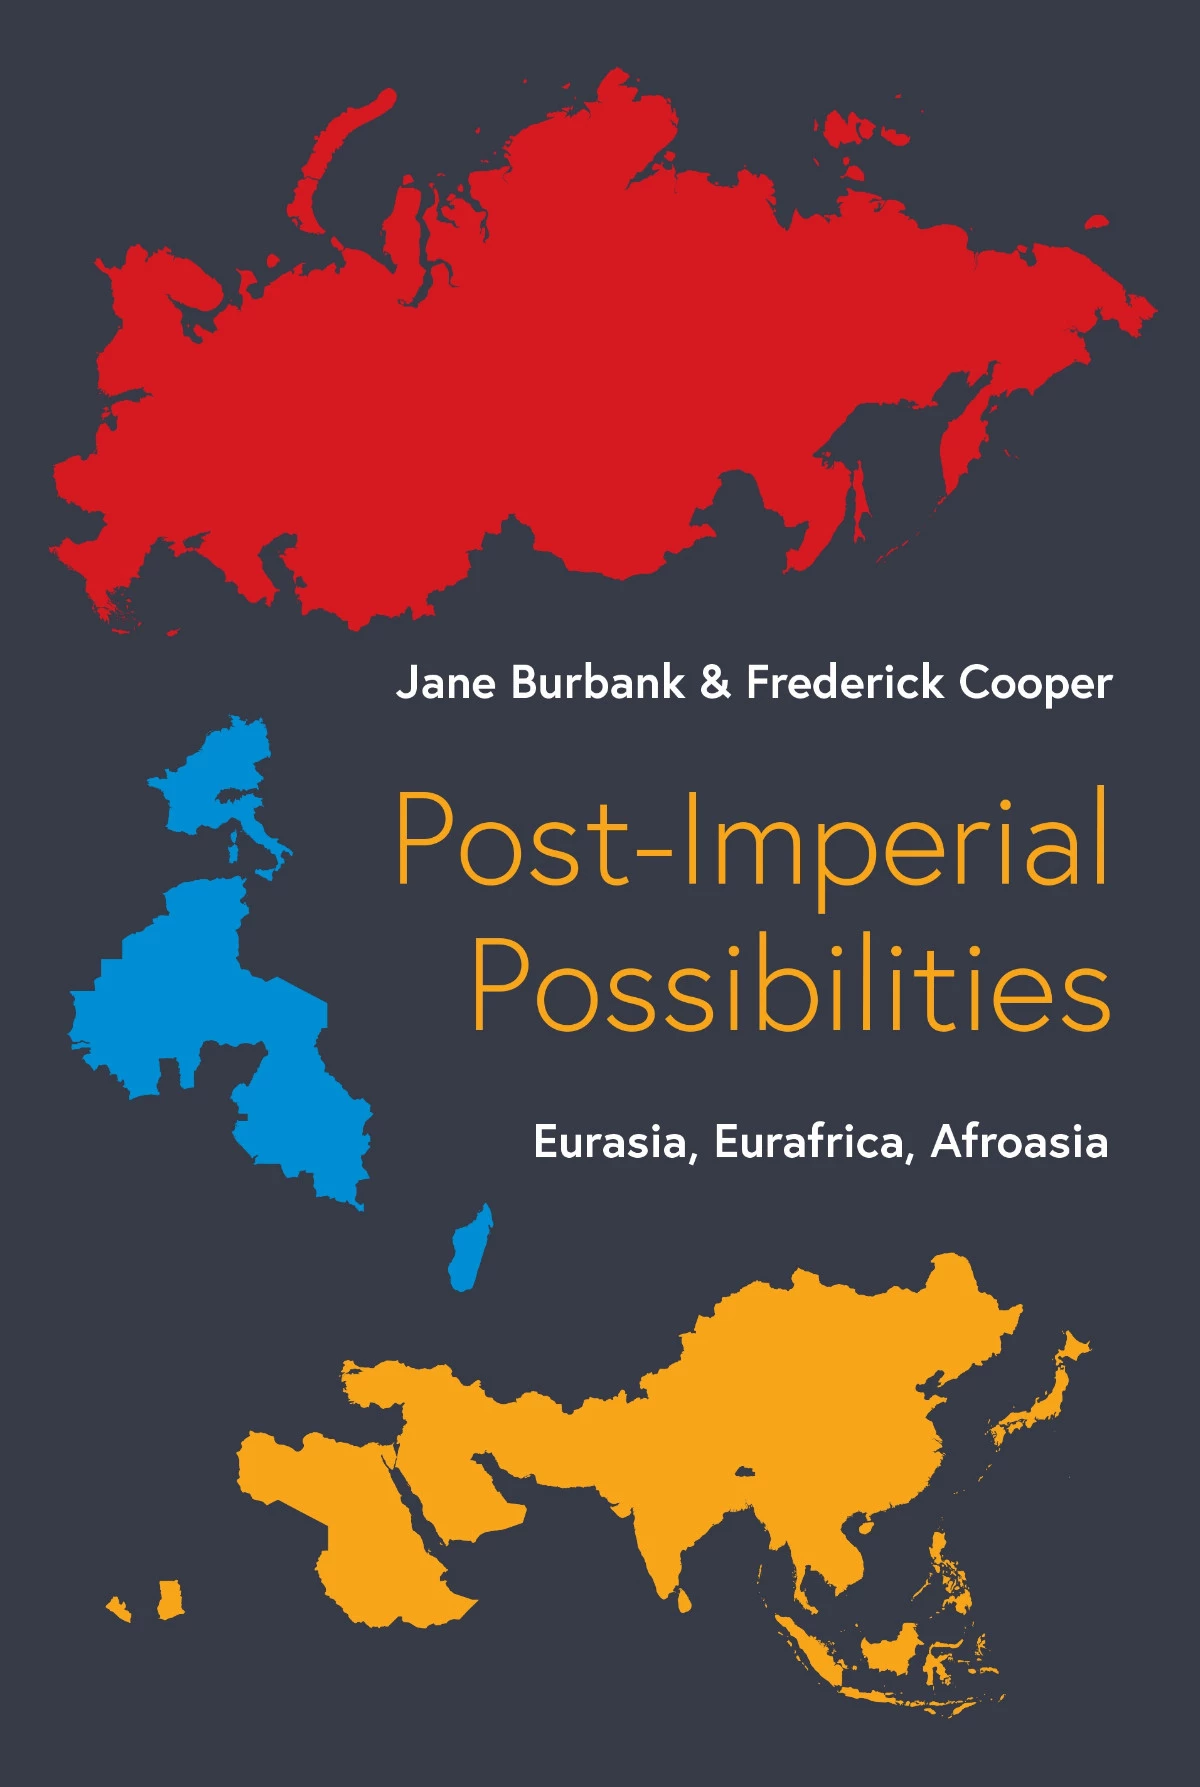 Jane Burbank, Frederick Cooper: Post-Imperial Possibilities: Eurasia, Eurafrica, Afroasia